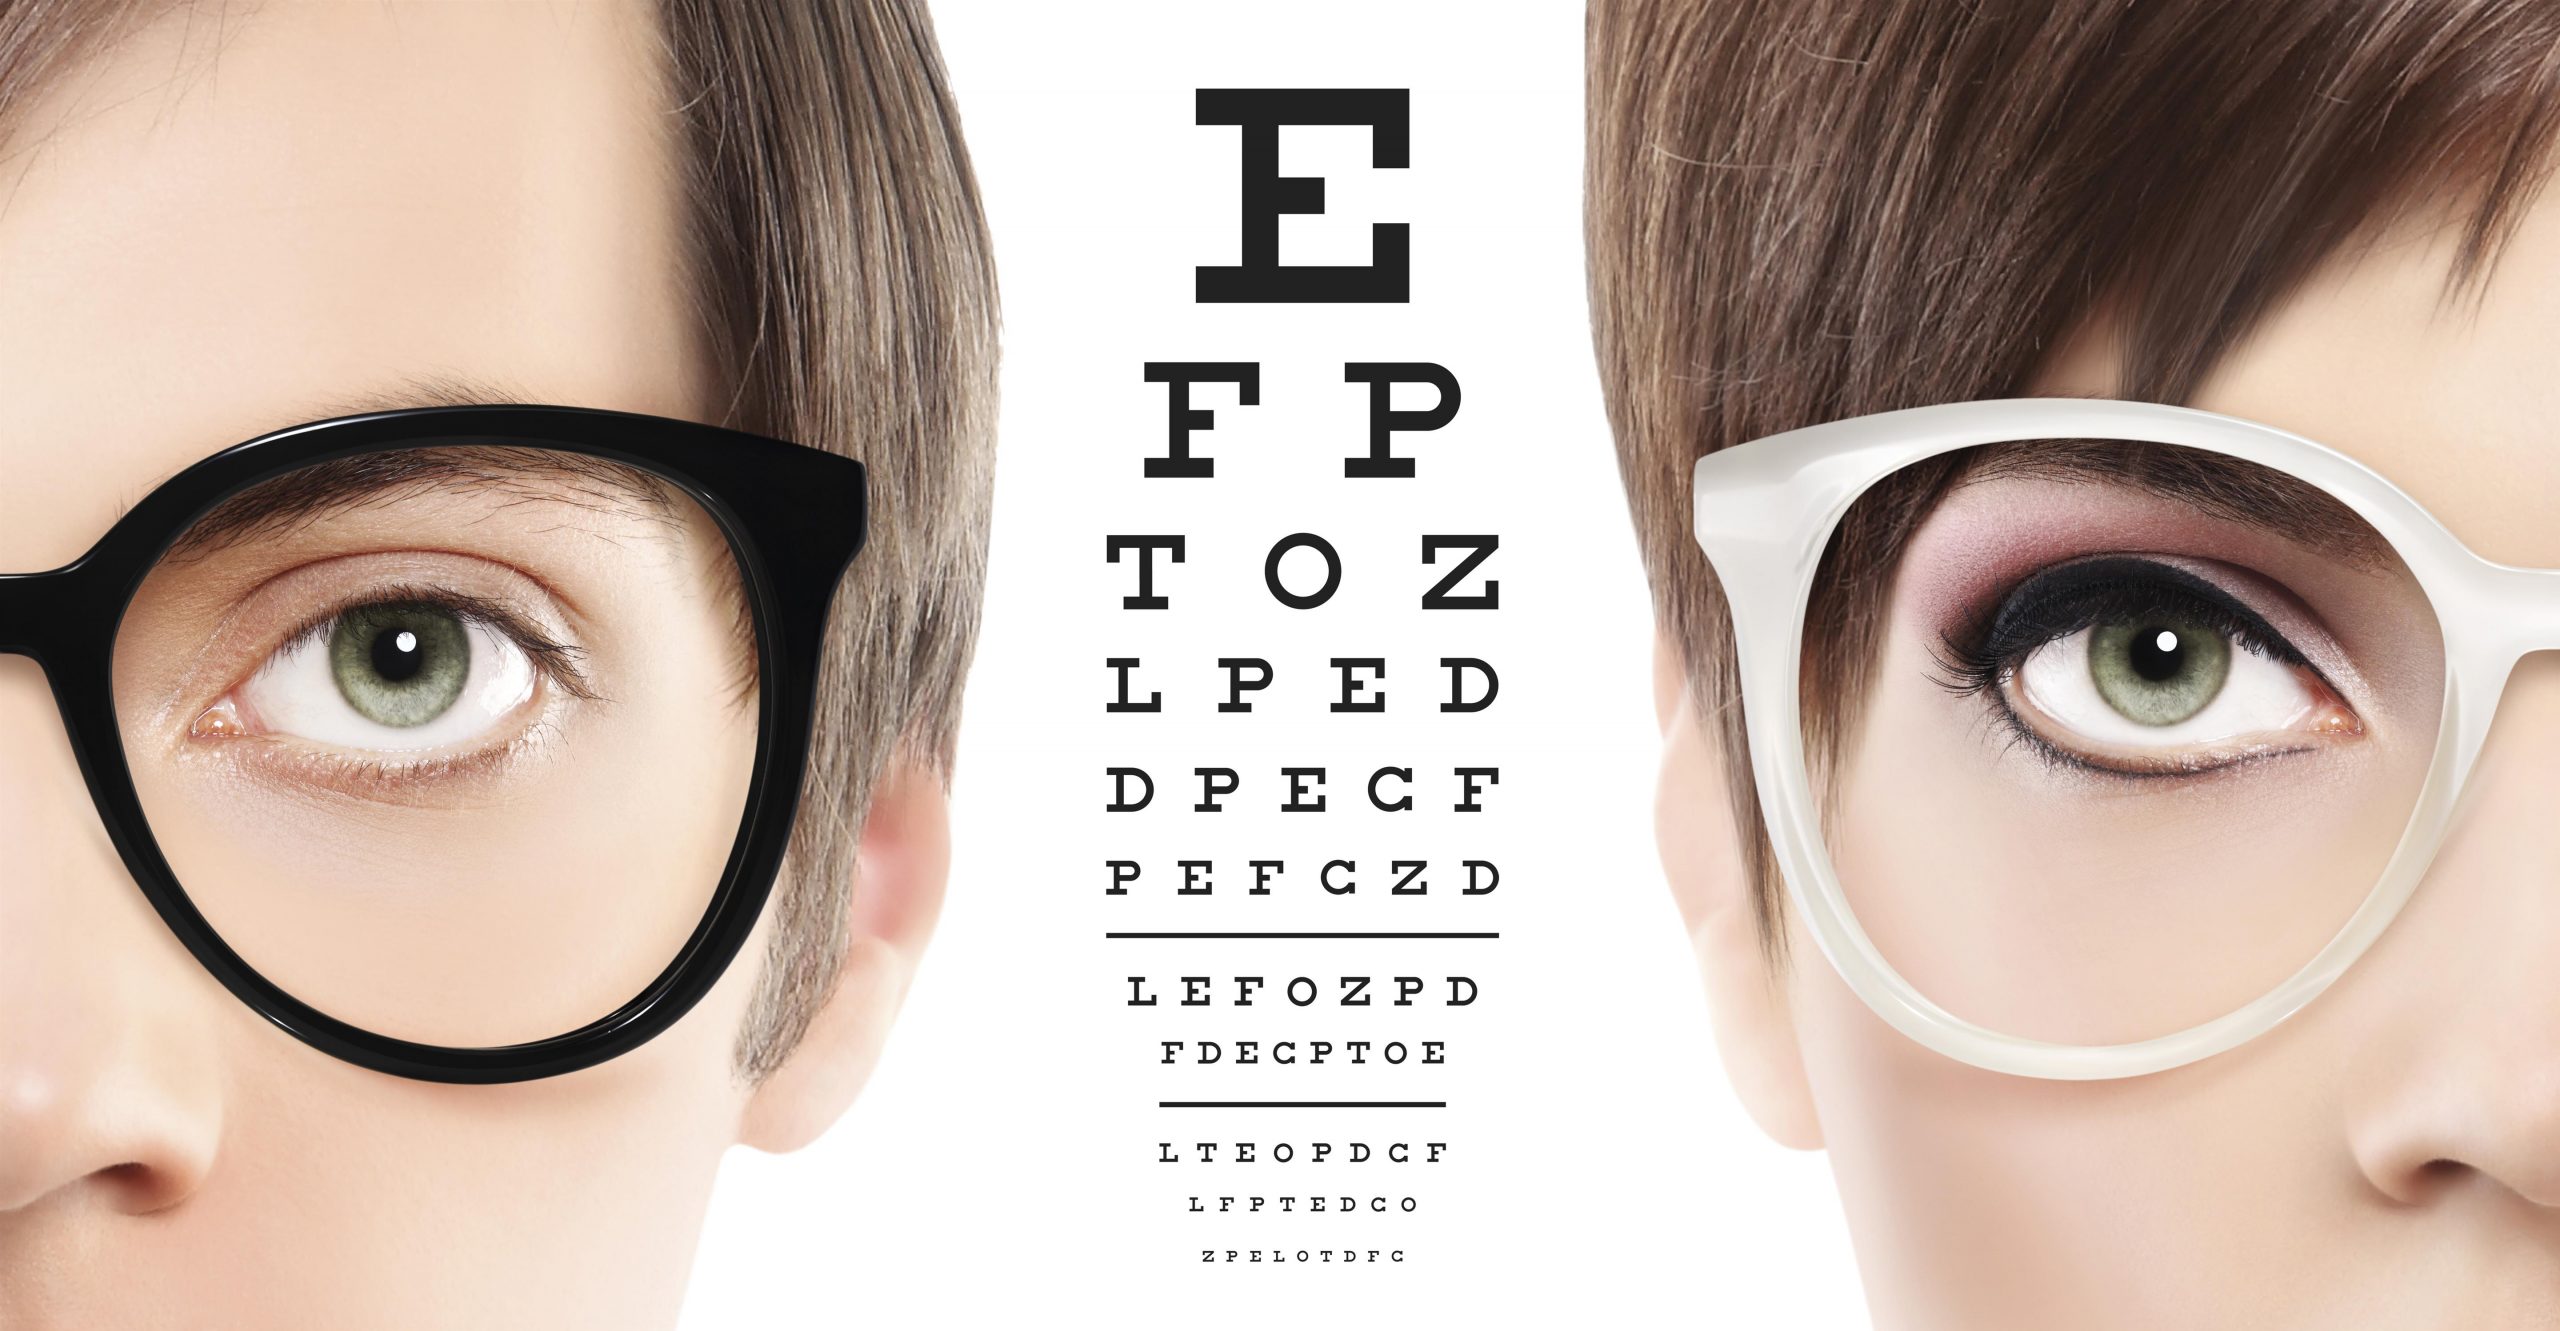 Глаз и зрение тест. Очки и таблица зрения. Очки для зрения фон. Плакат для зрения. Очки для зрения баннер.